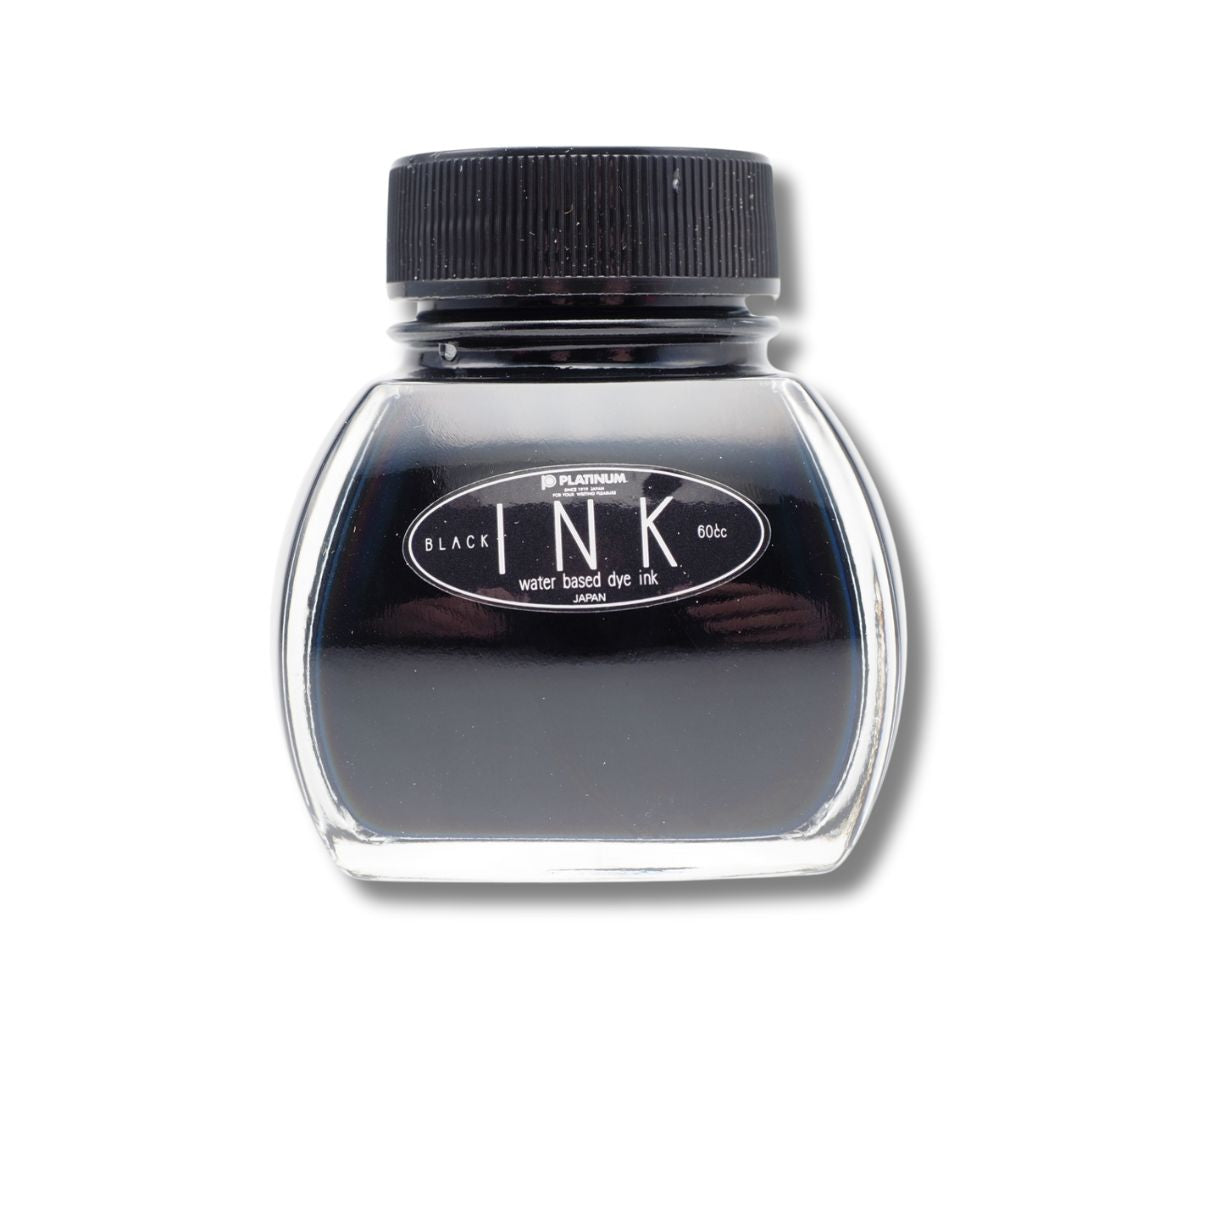 Platinum - Dyestuff Ink black